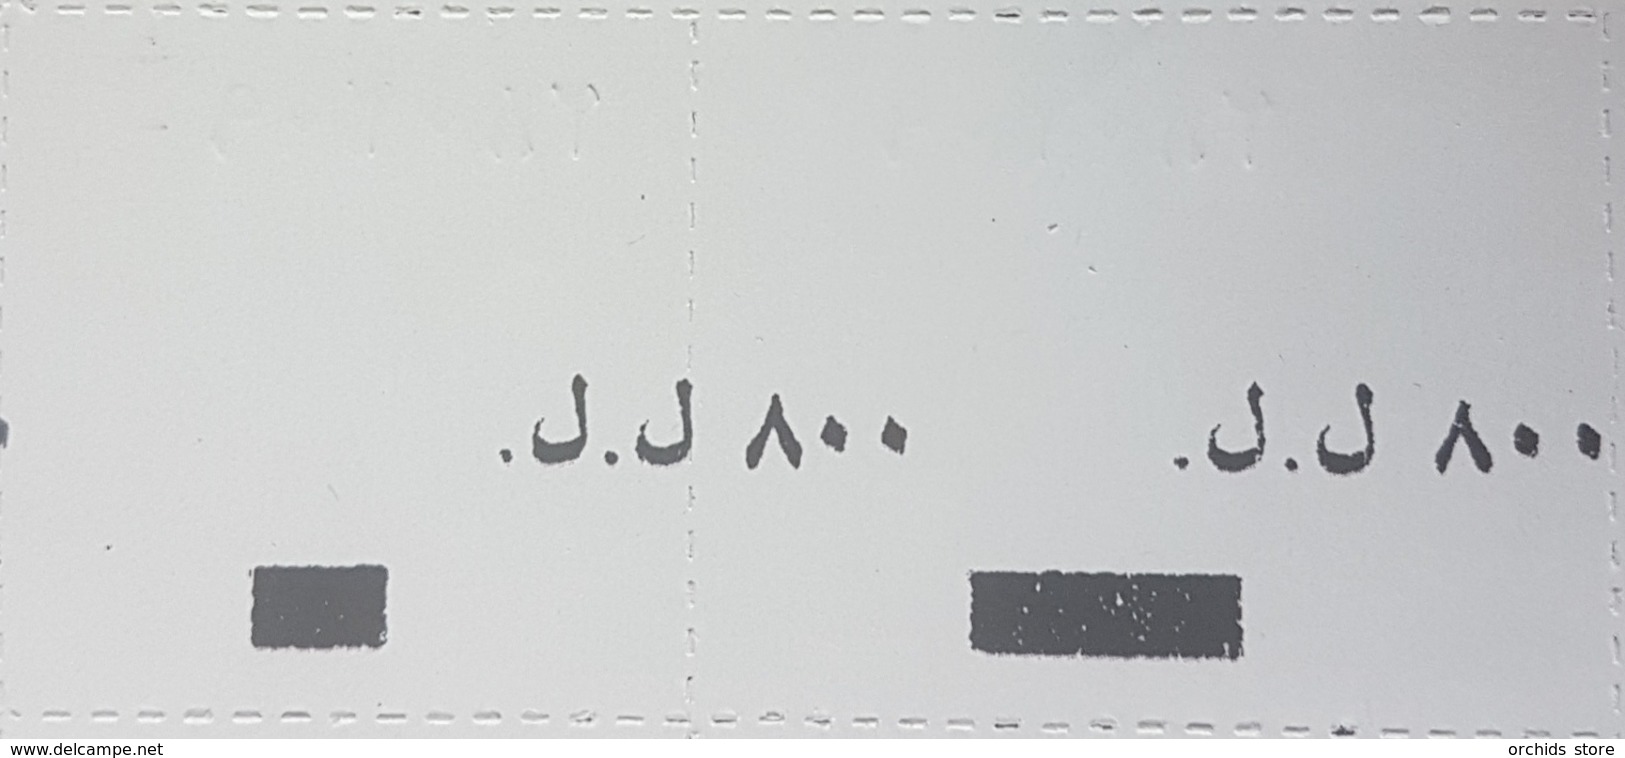 Lebanon 1983 Driving Offense Tax (Fine) Revenue Stamp ERROR - 800L Overprint On Back - MNH - Scarce - Lebanon